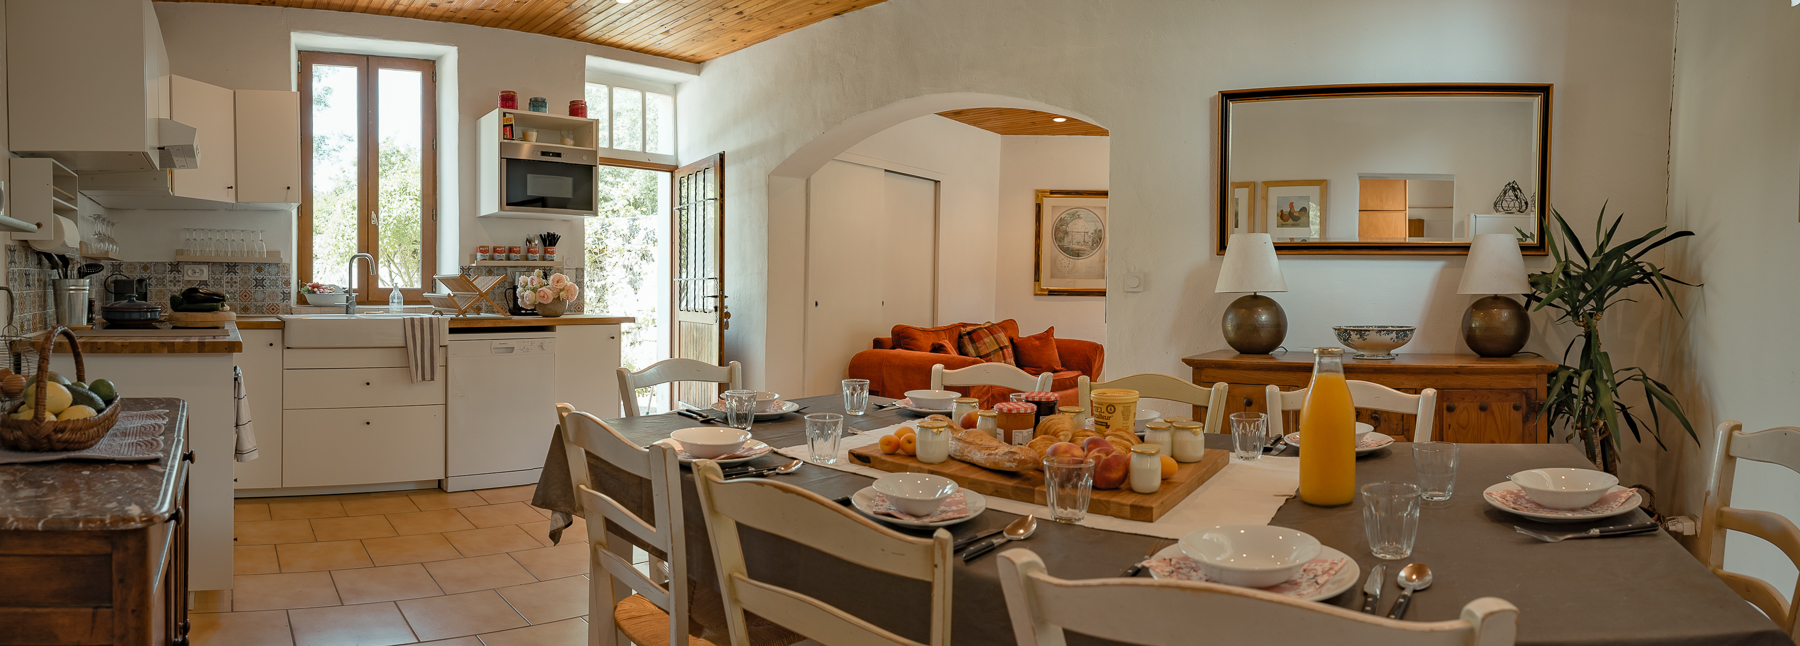 Coach House Dining and living space at Chateau de la Vigne